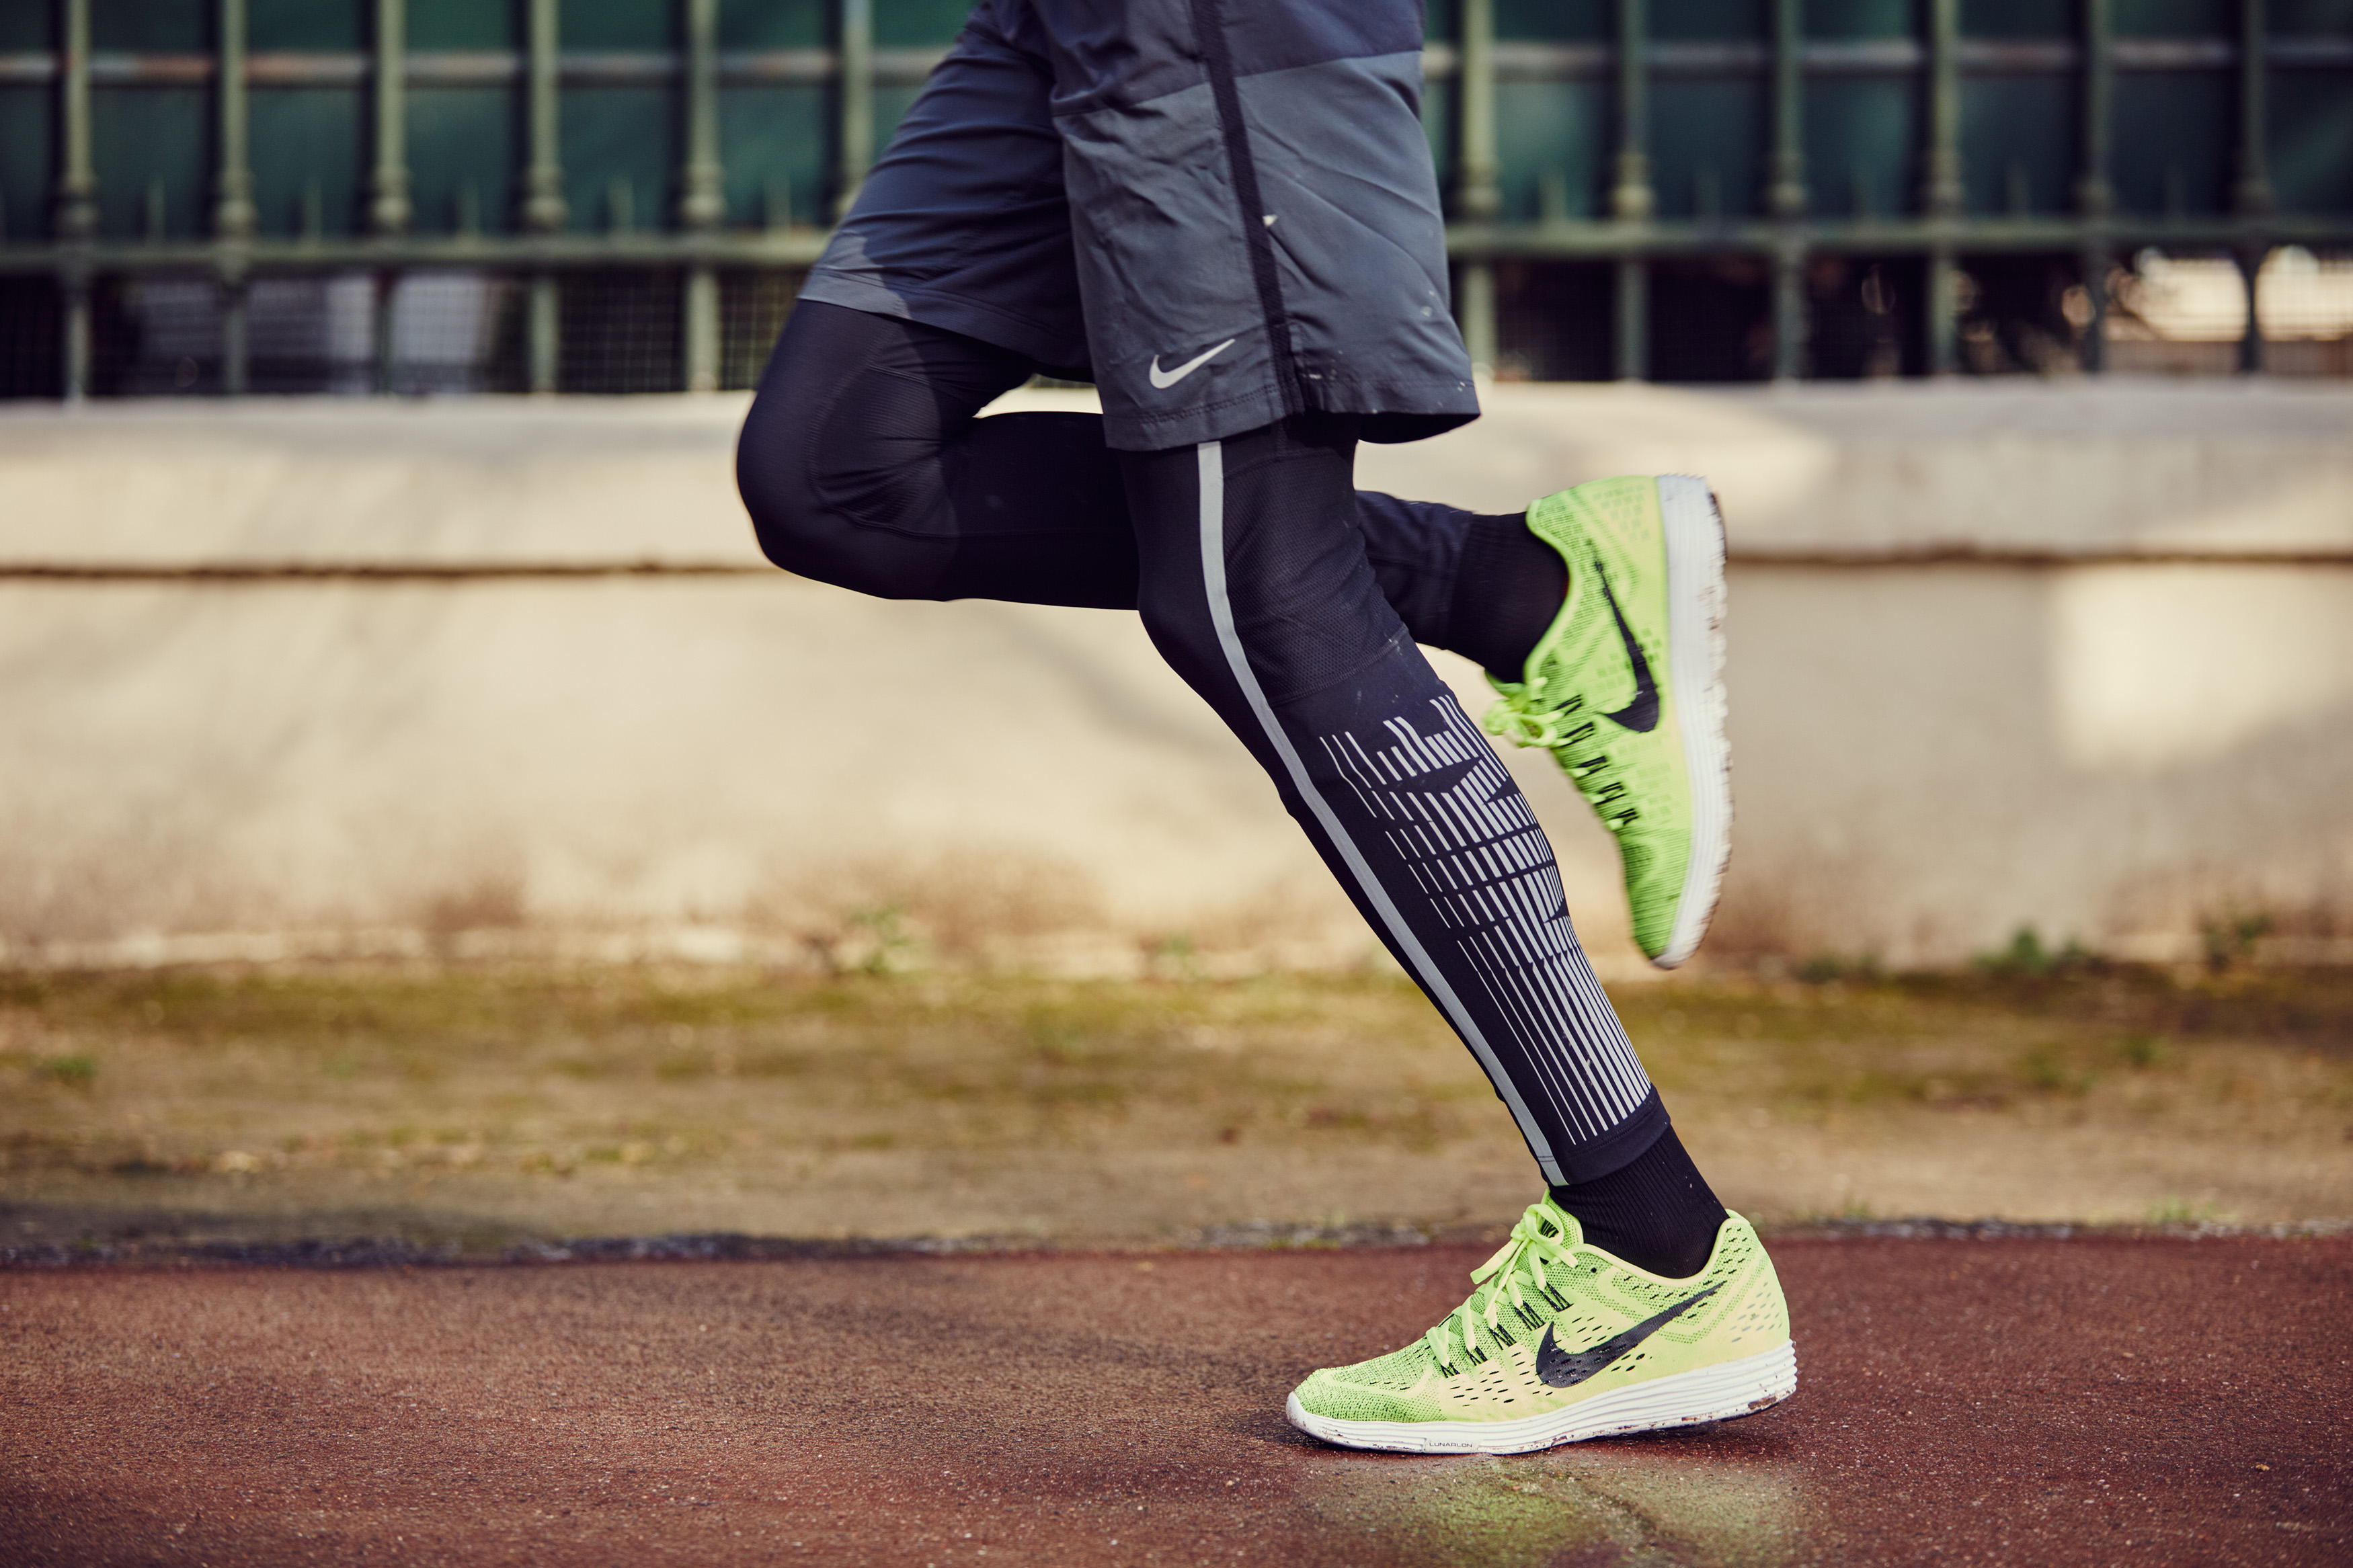 Homme - Nike Chaussures de Running